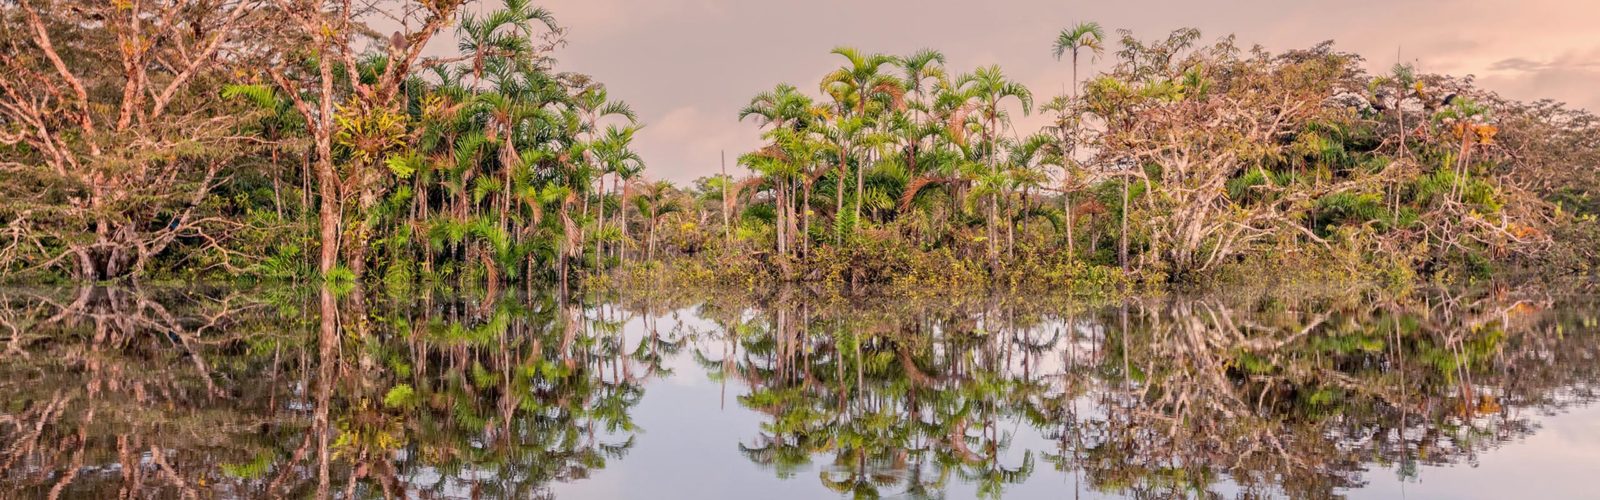 vegetation-amazon-ecuador